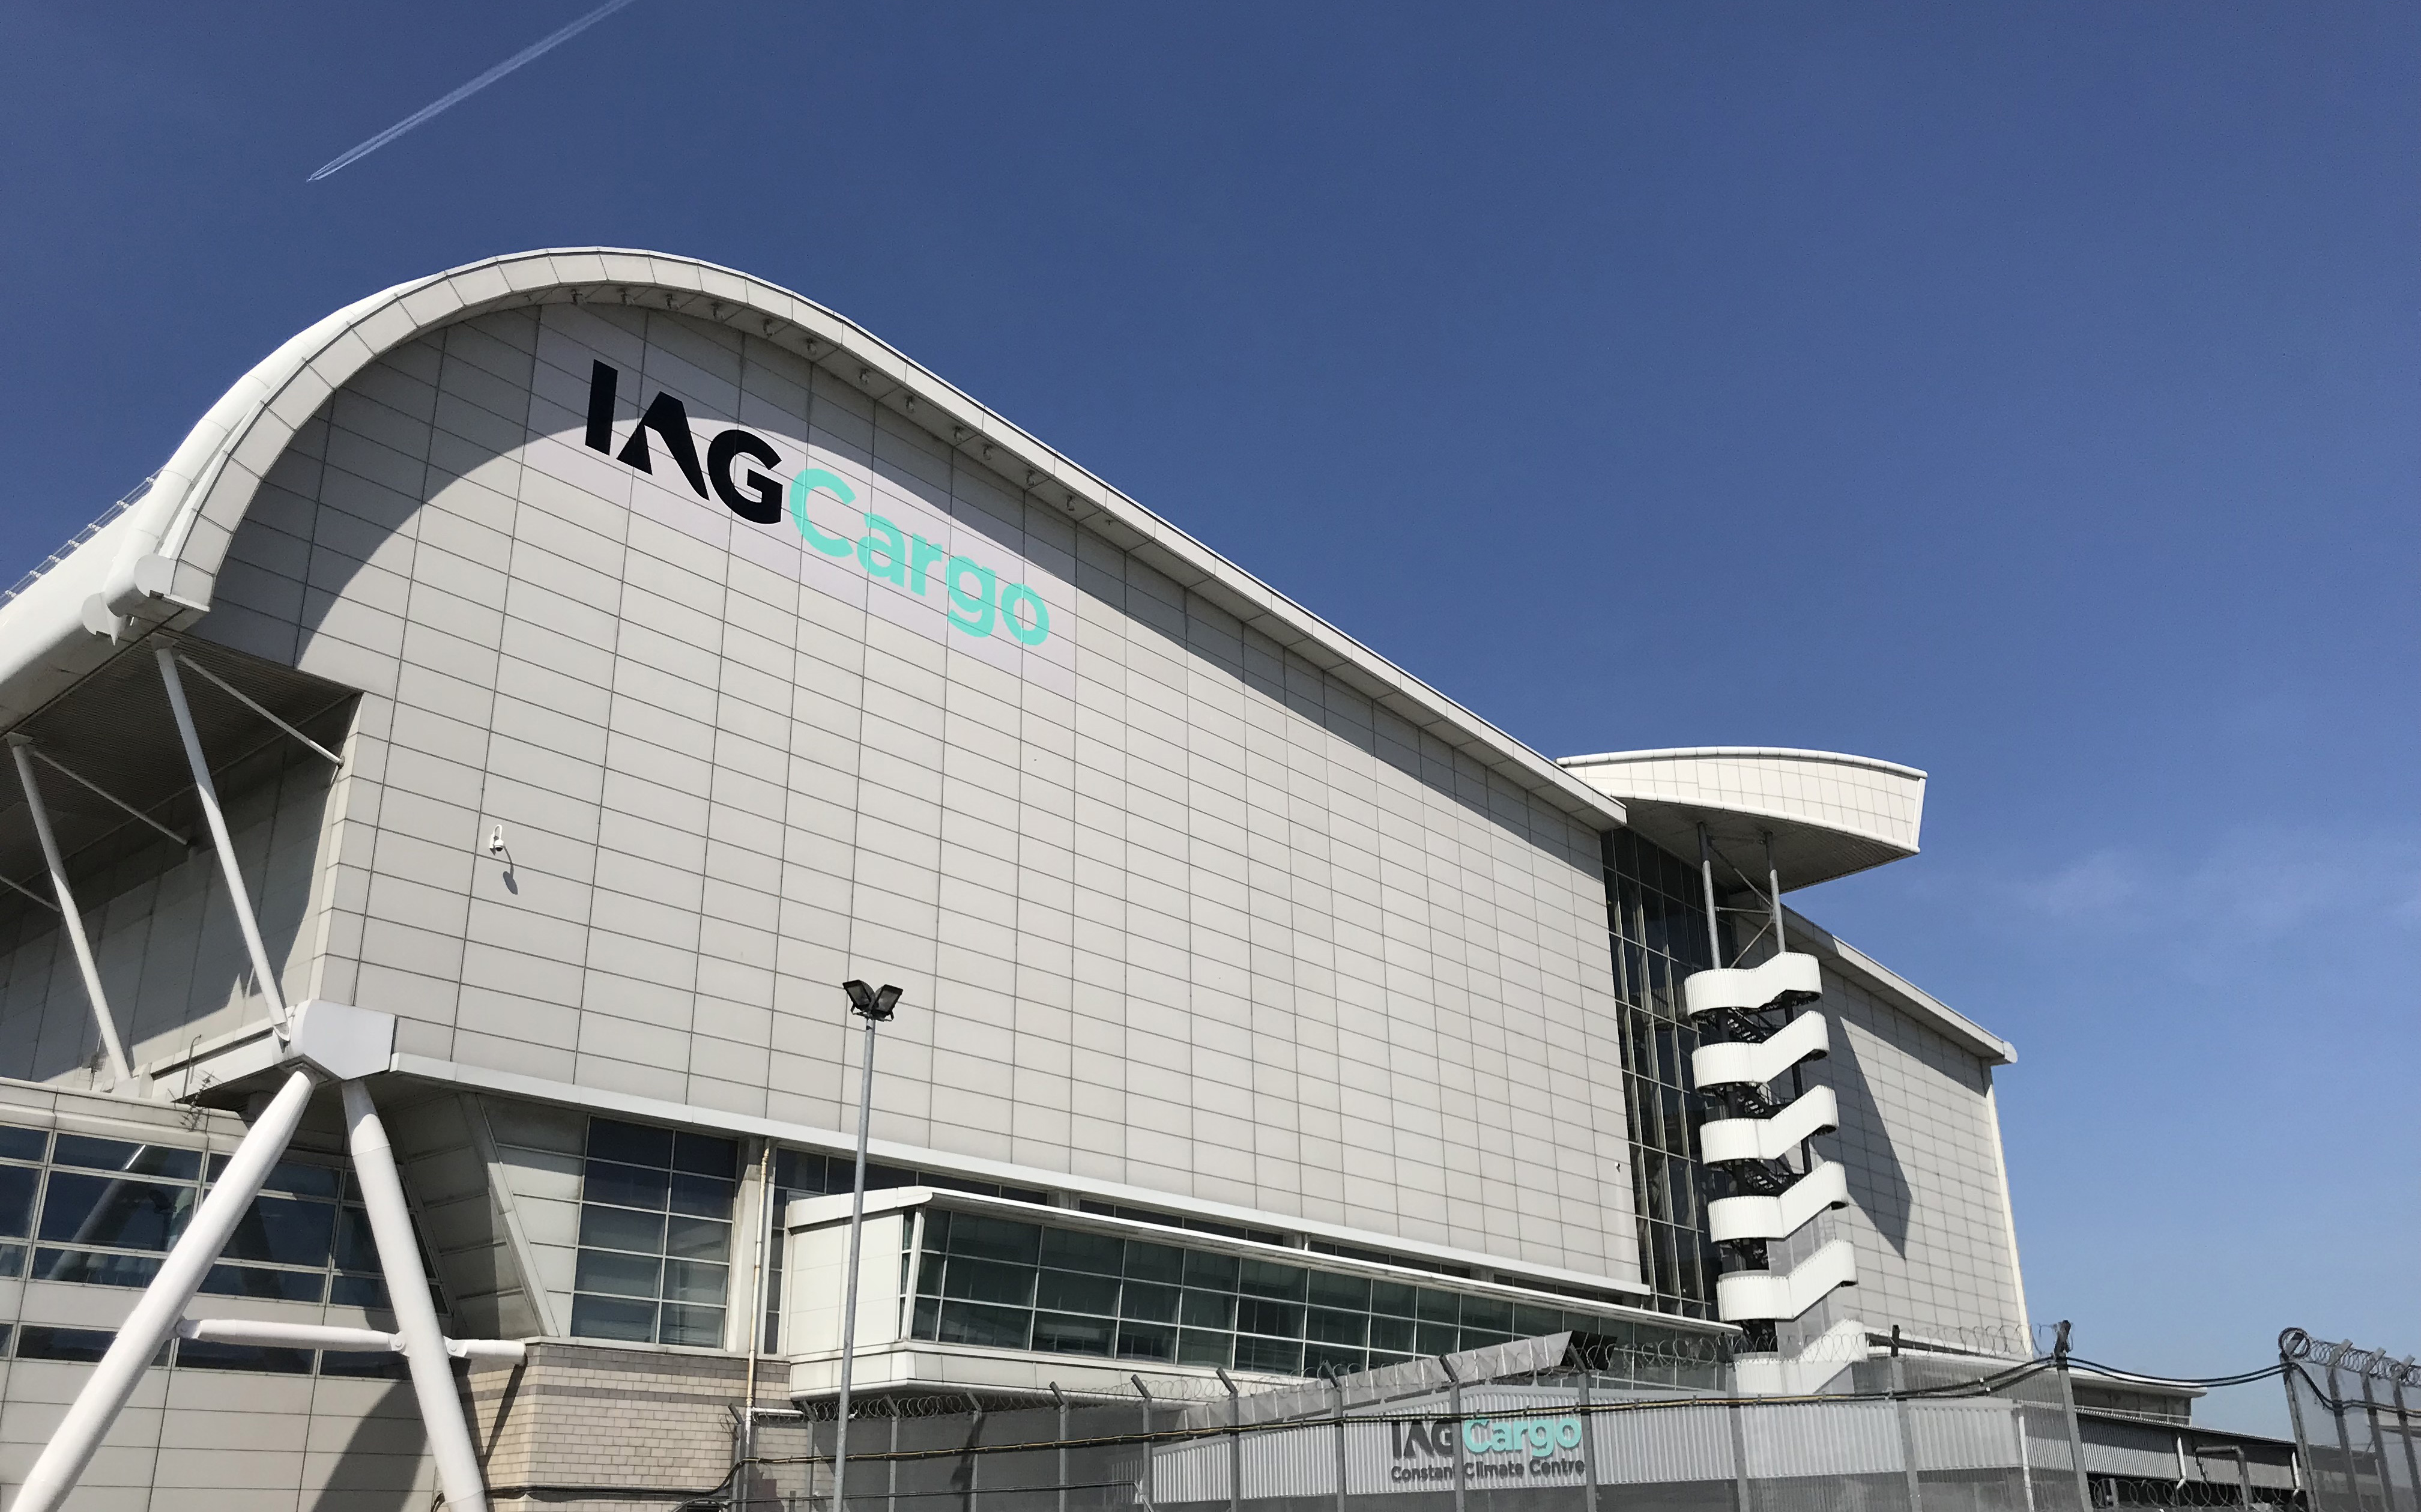 IAG Cargo building at Heathrow